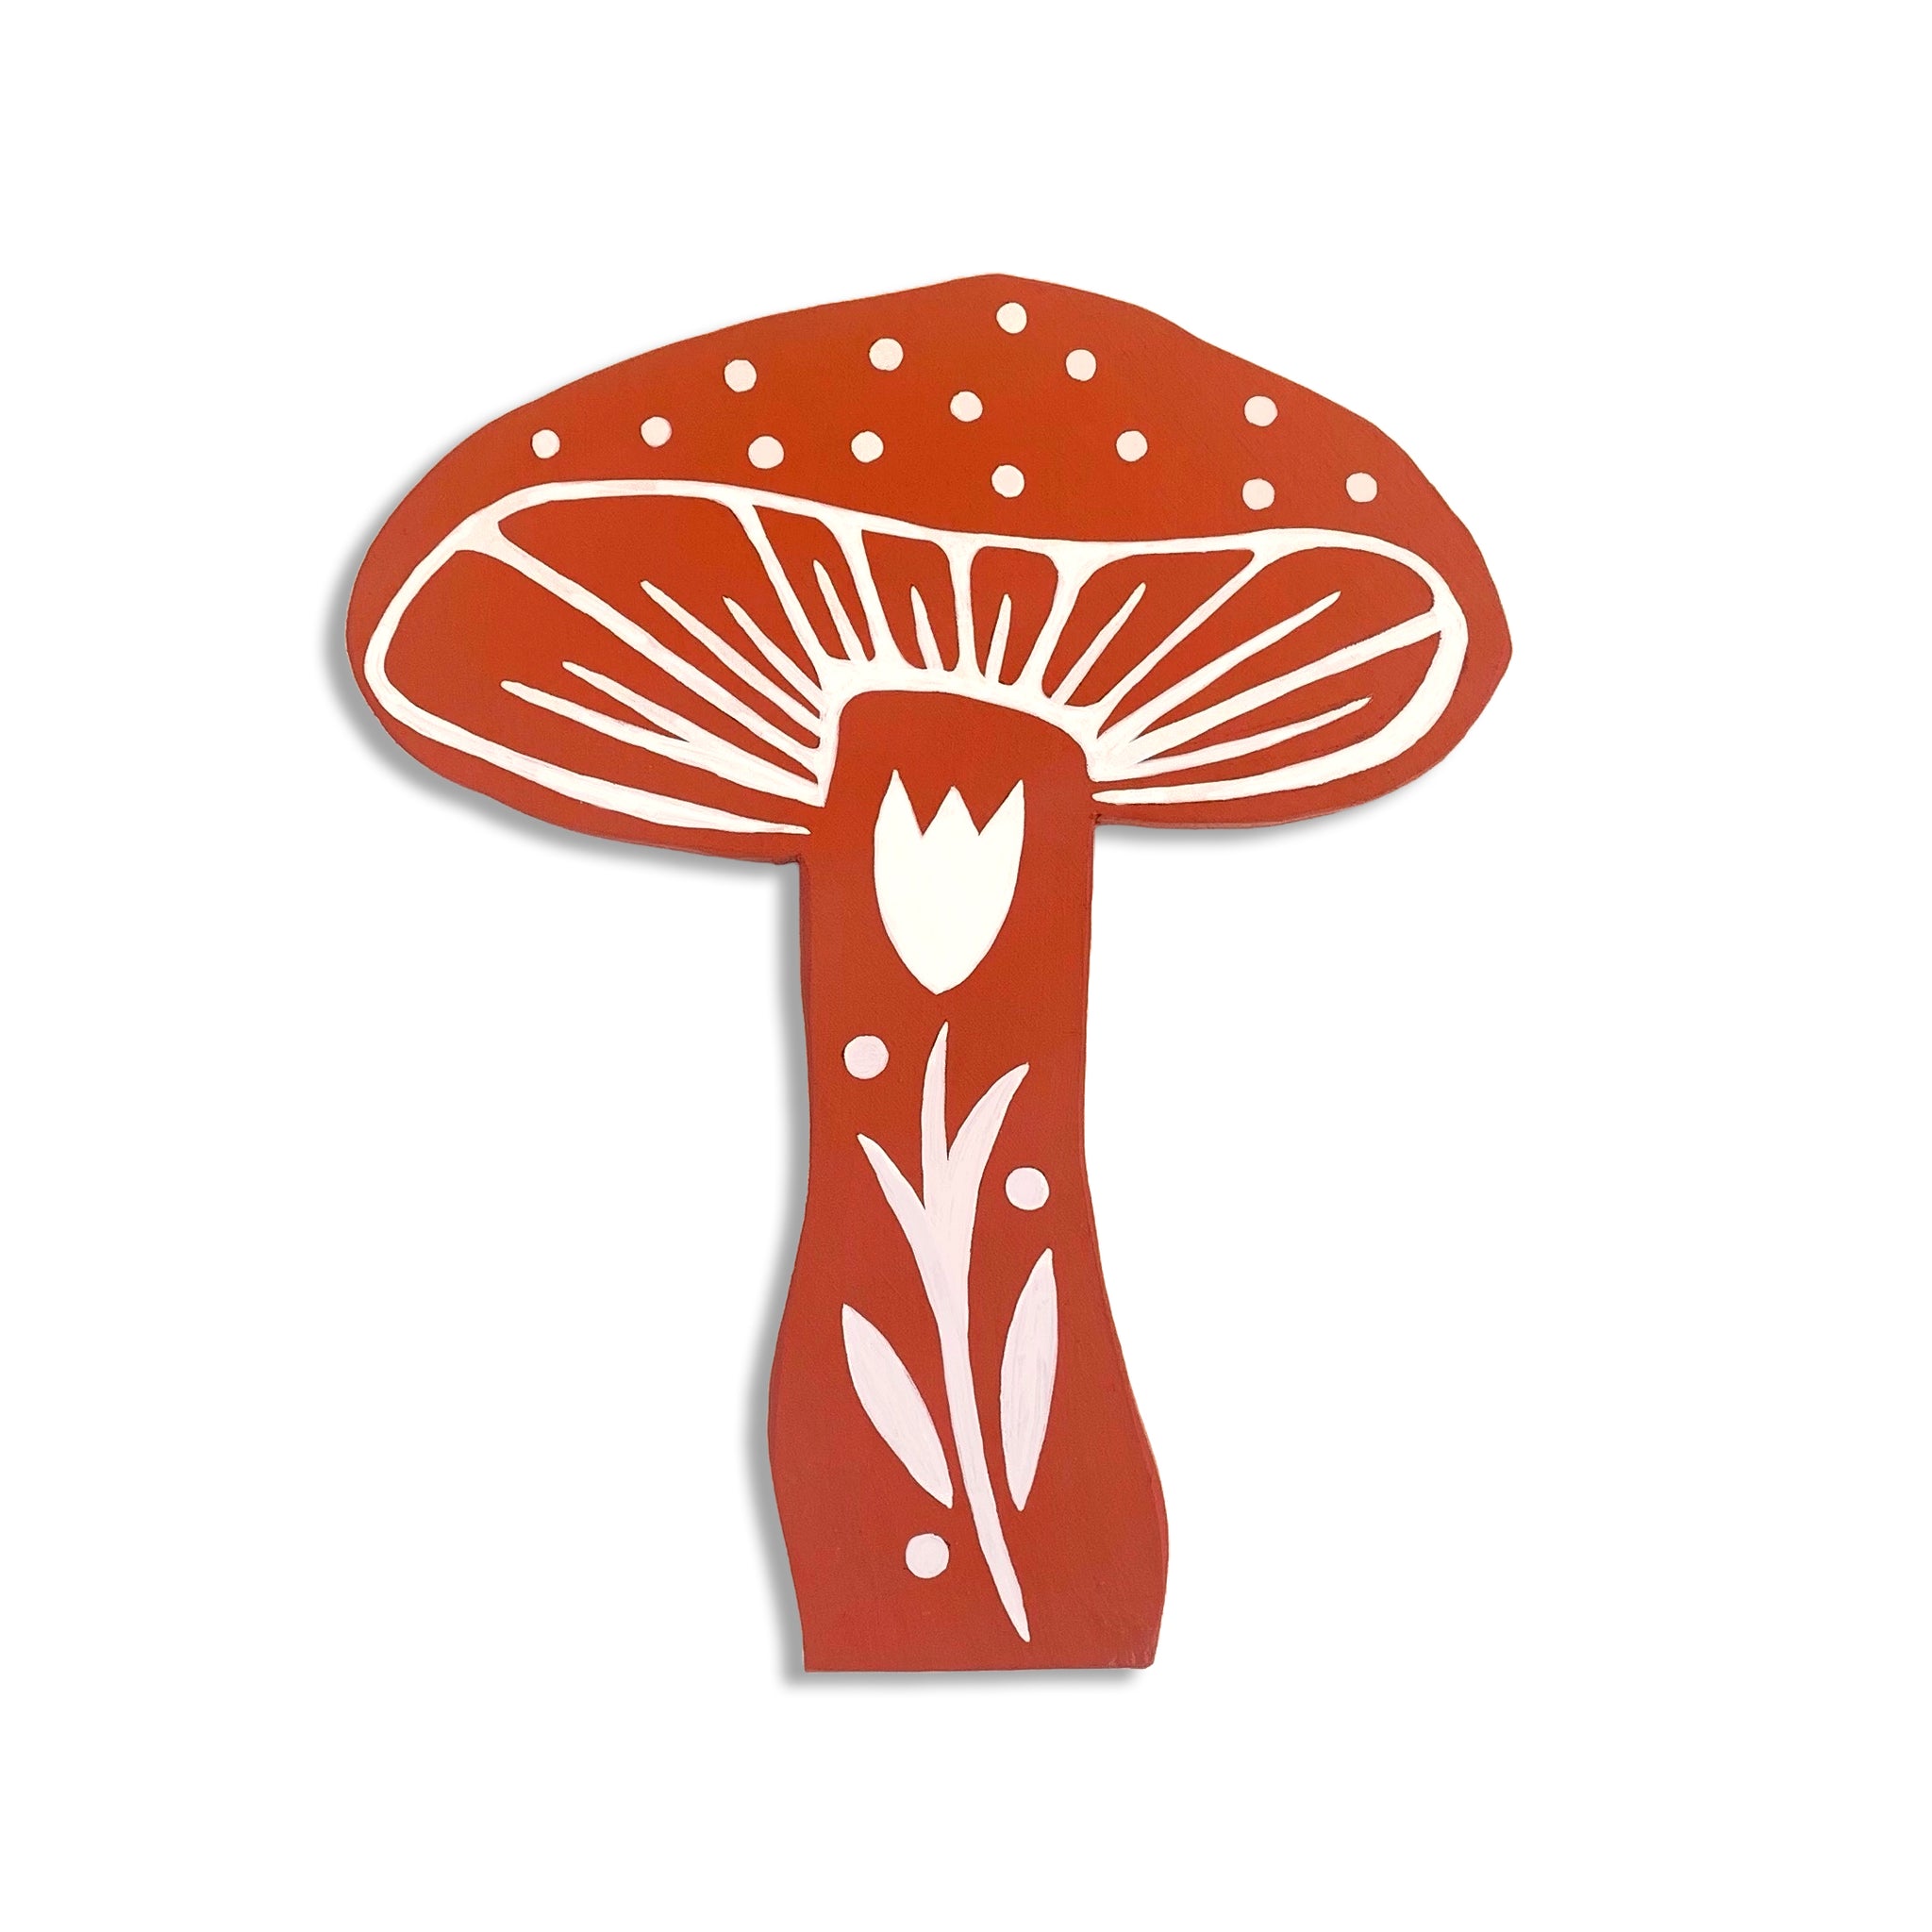 Wooden Mushroom in Red